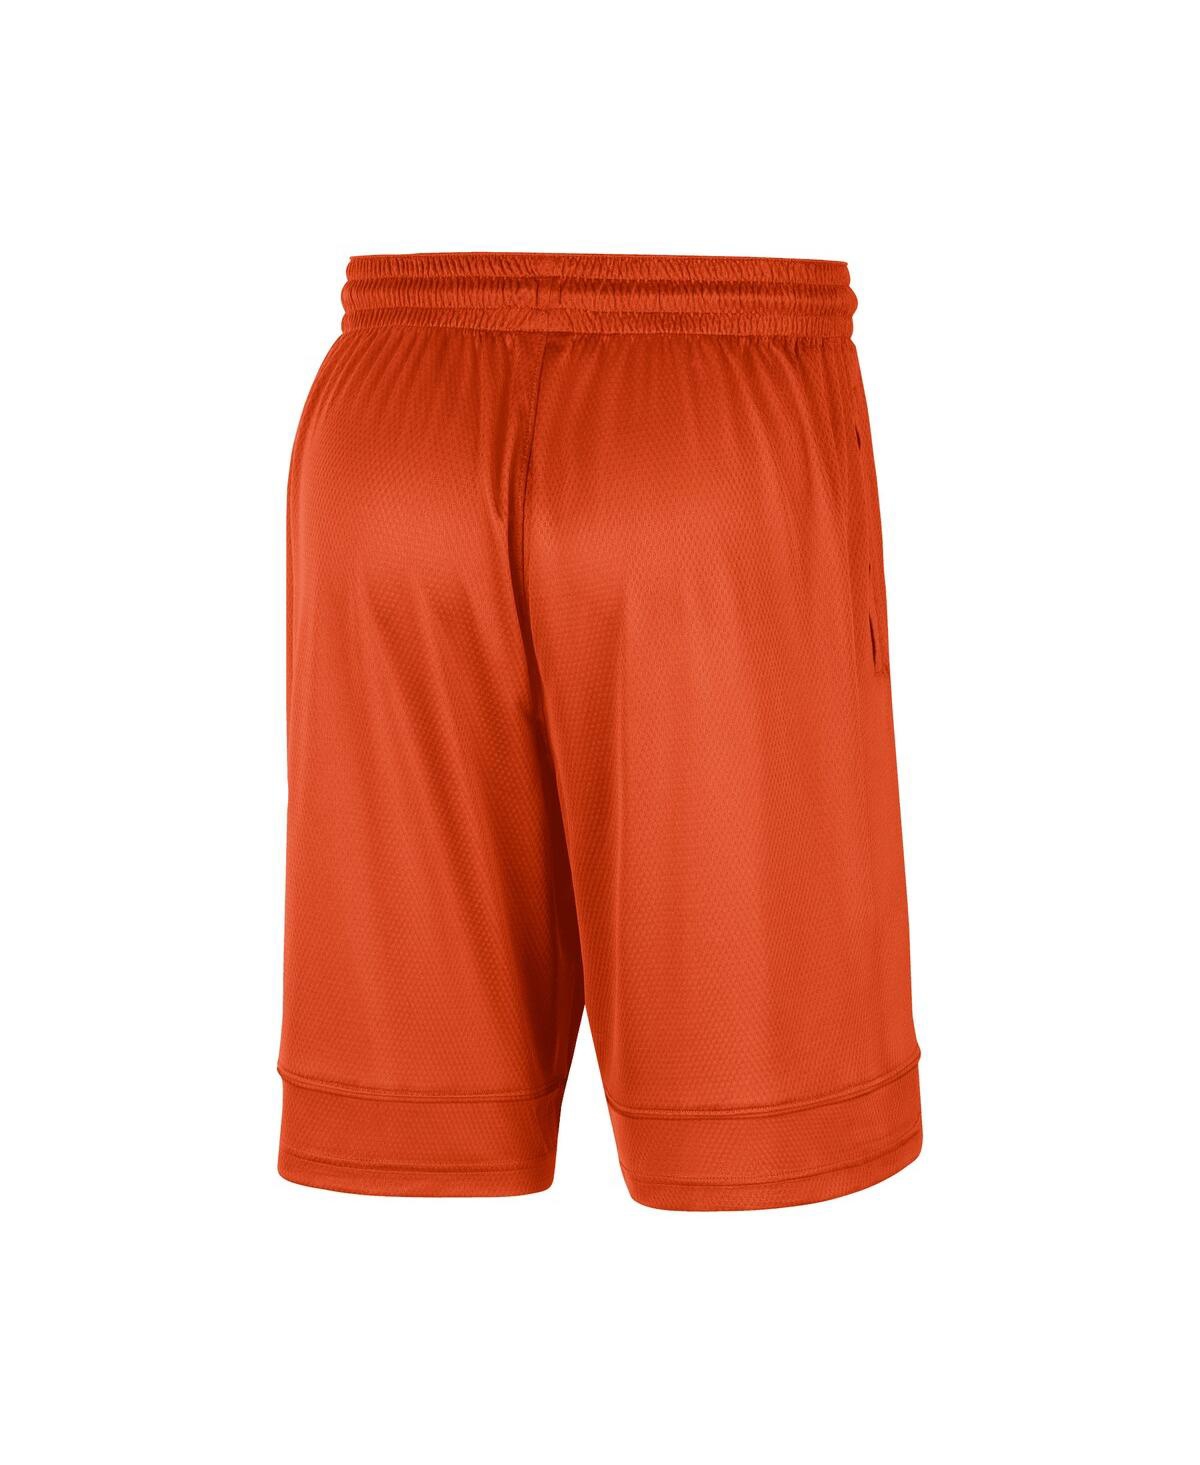 Shop Nike Men's  Orange Clemson Tigers Fast Break Team Performance Shorts